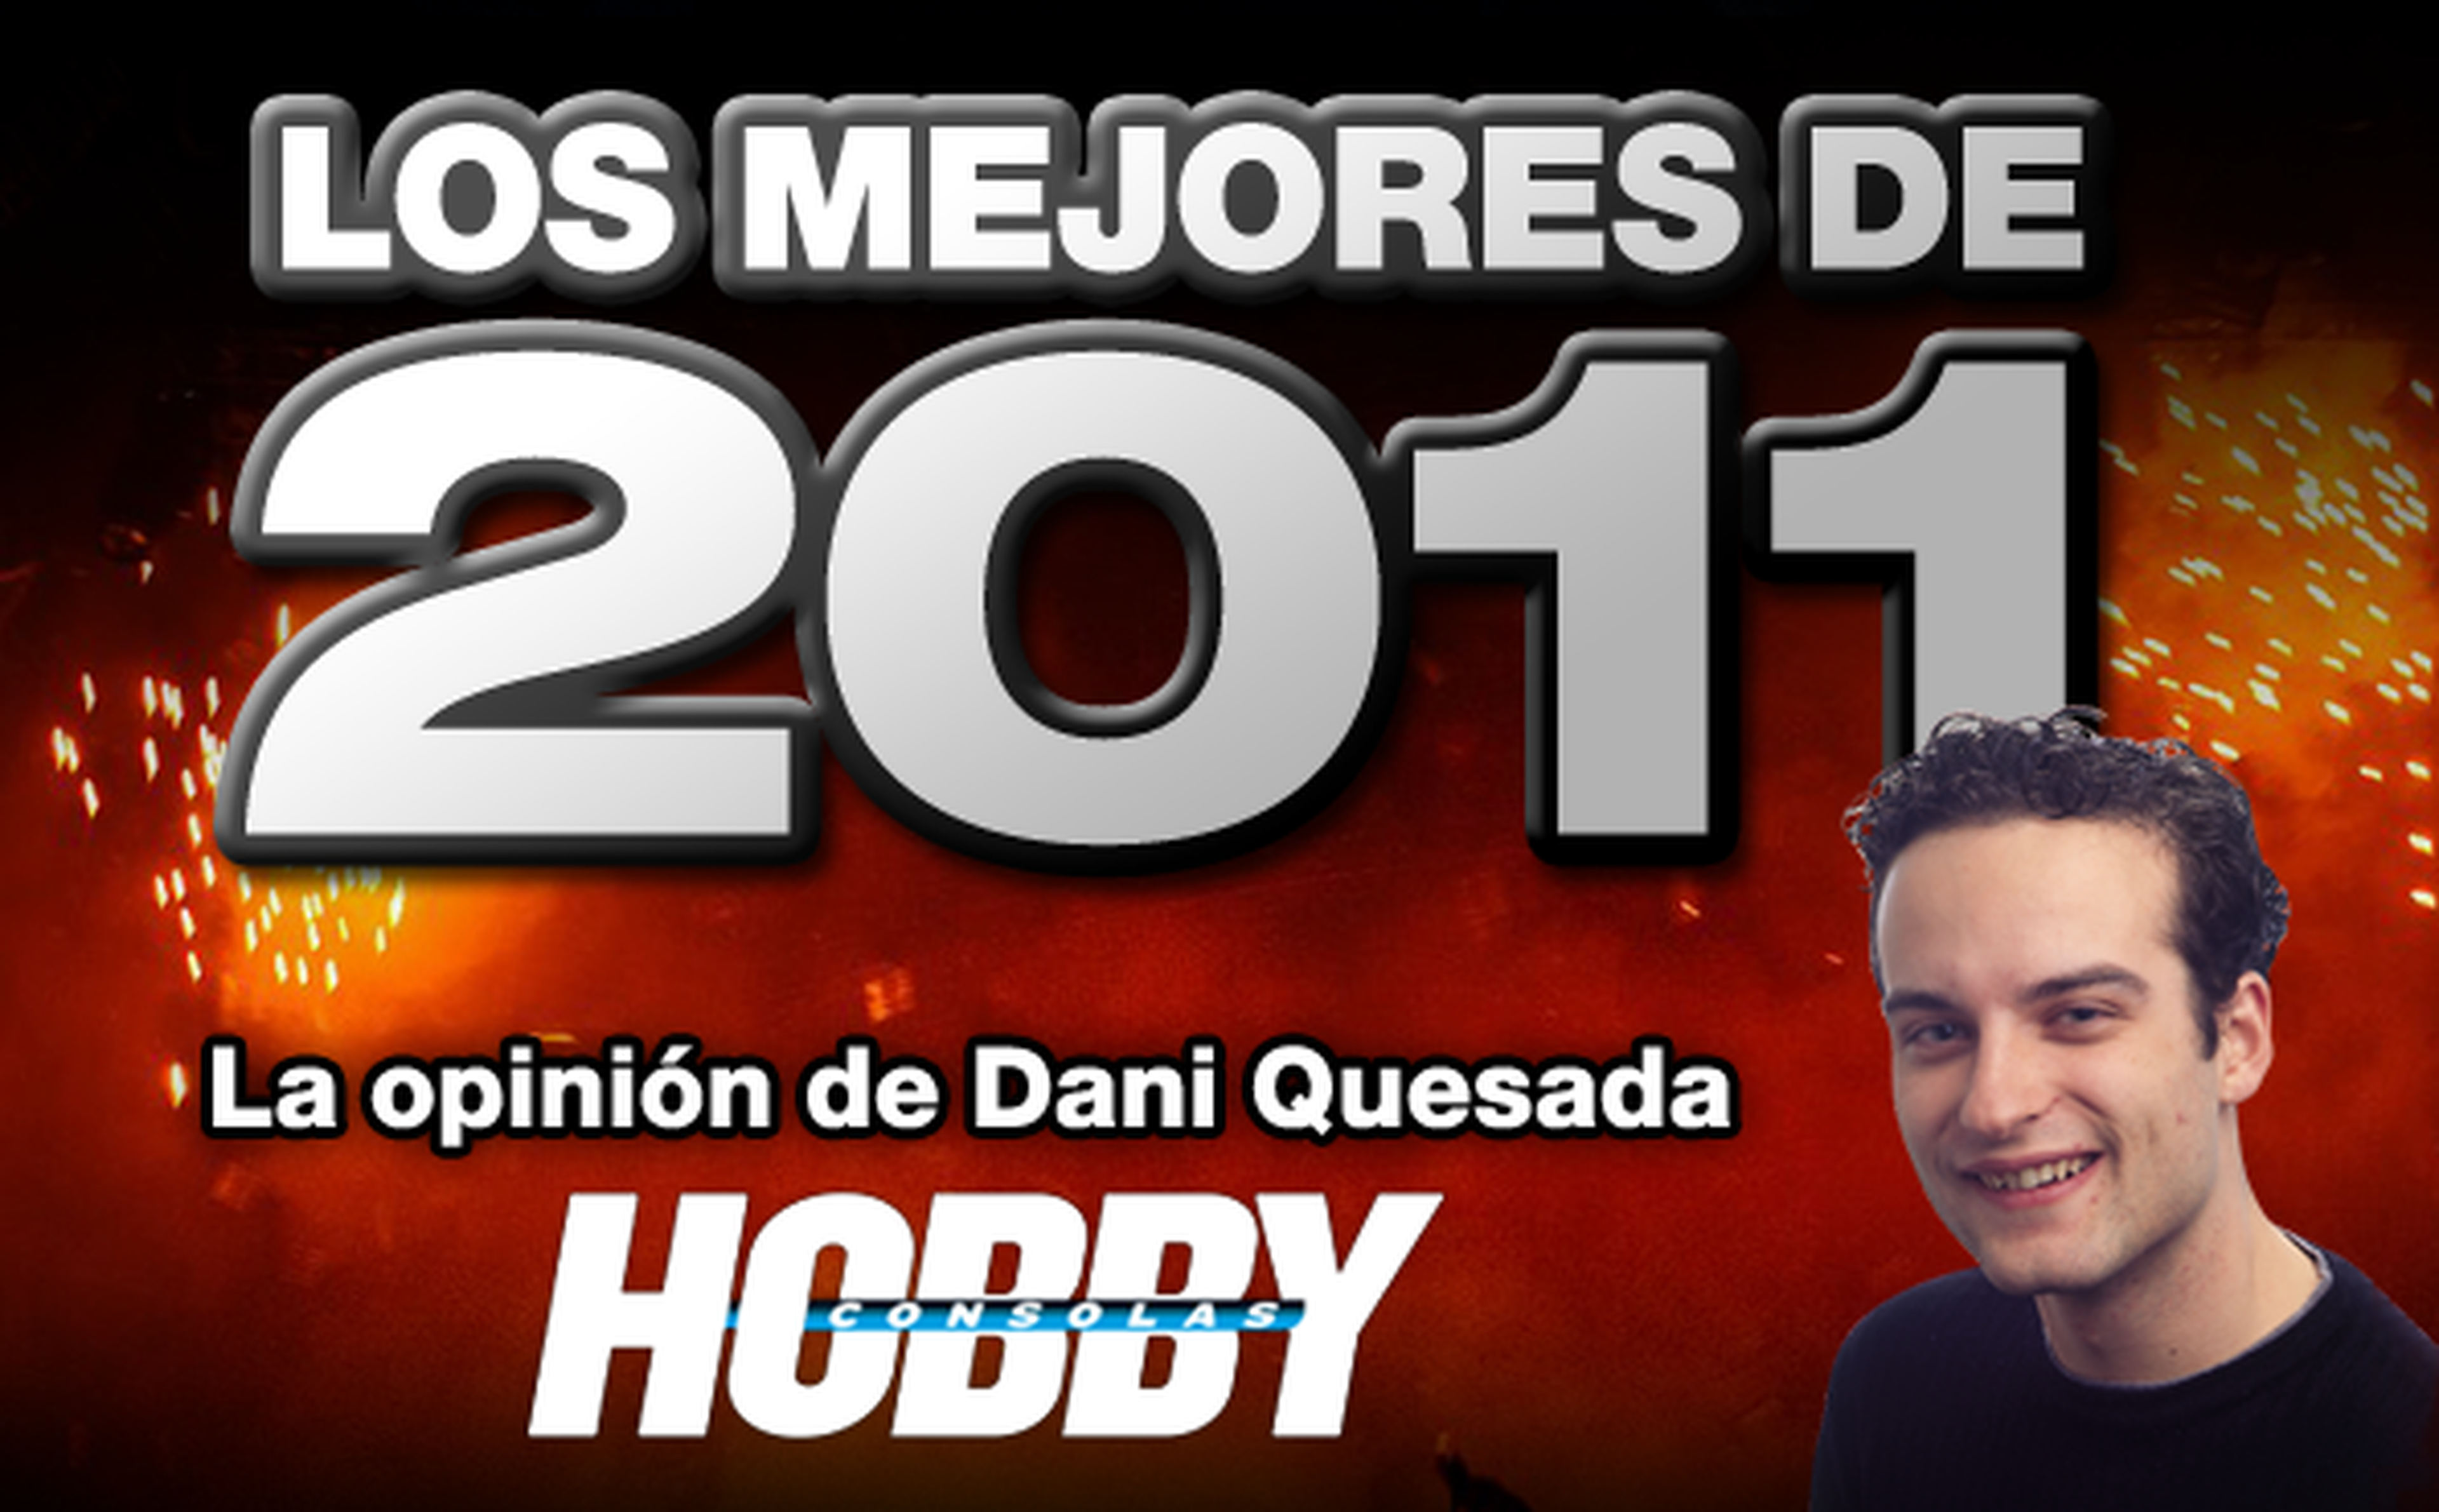 Los mejores de 2011: Daniel Quesada